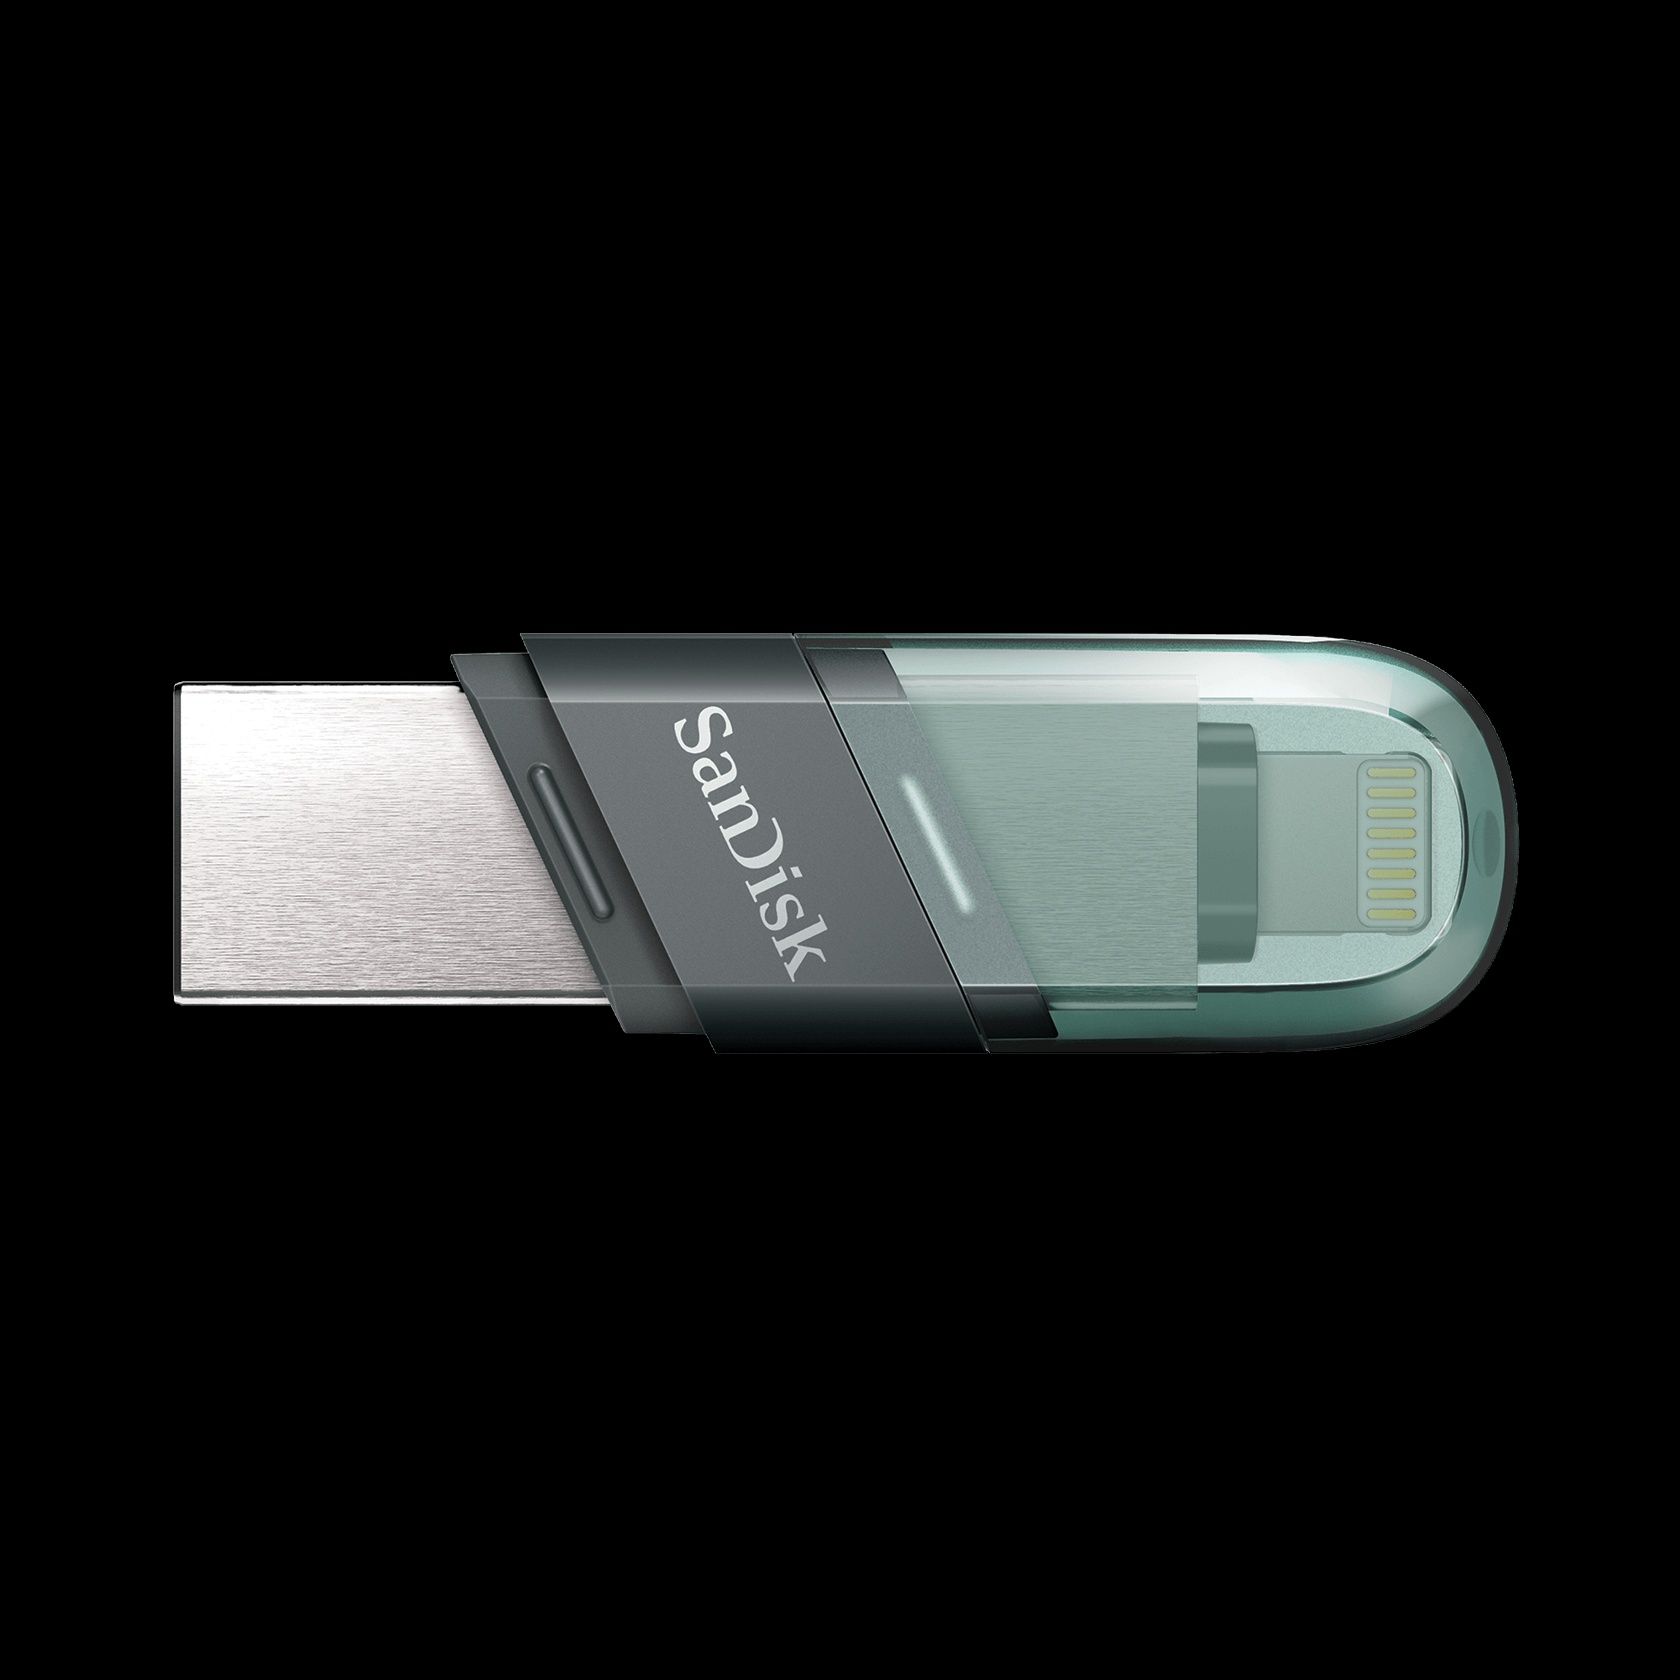 Флешка, Fleshka для Iphone, Ipad и PC USB Lightning